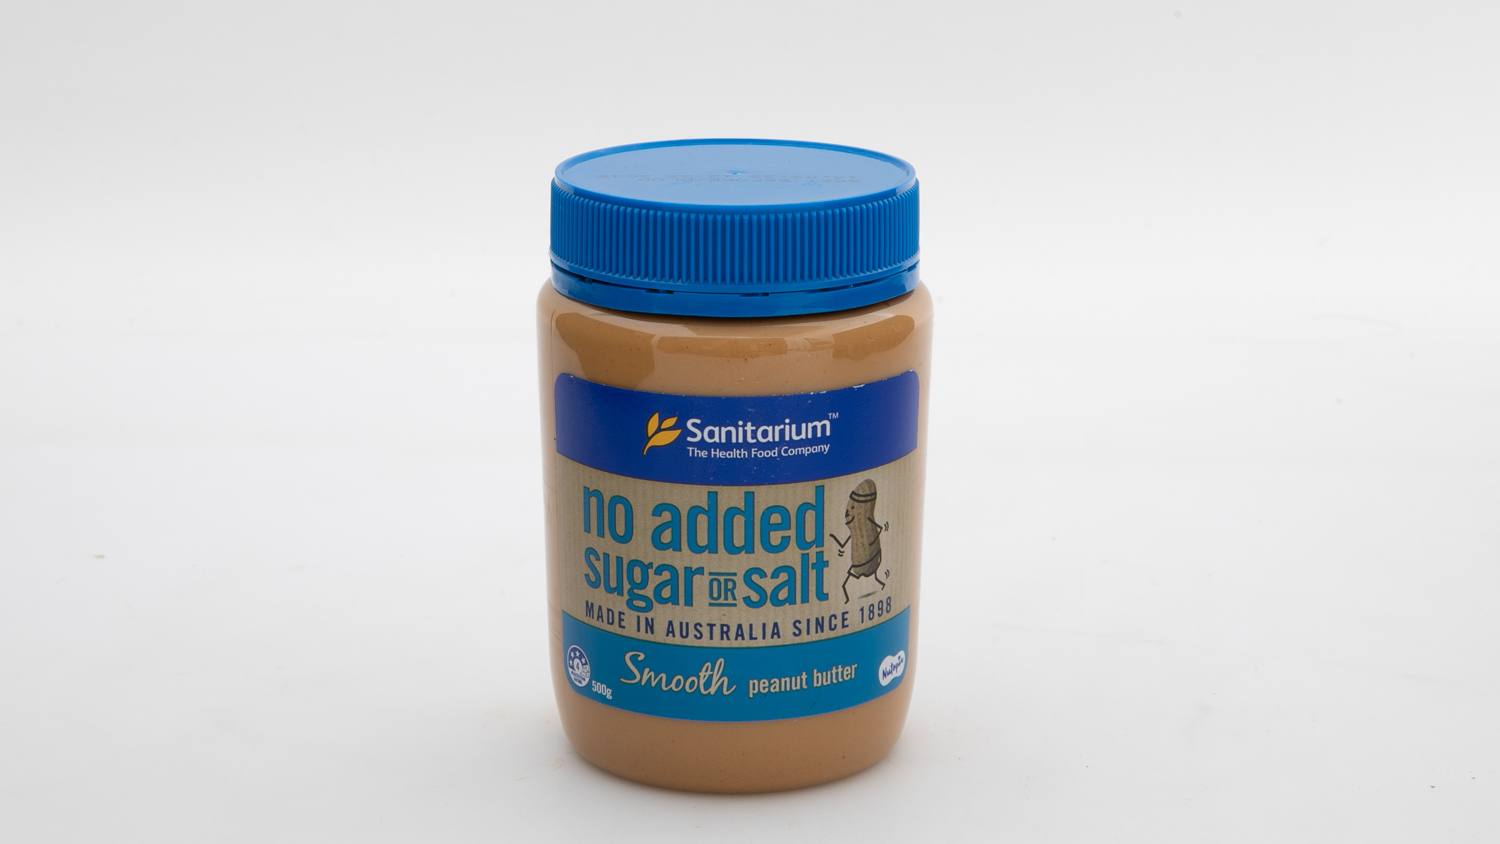 Sanitarium Natural Peanut Butter No Added Sugar or Salt Smooth carousel image